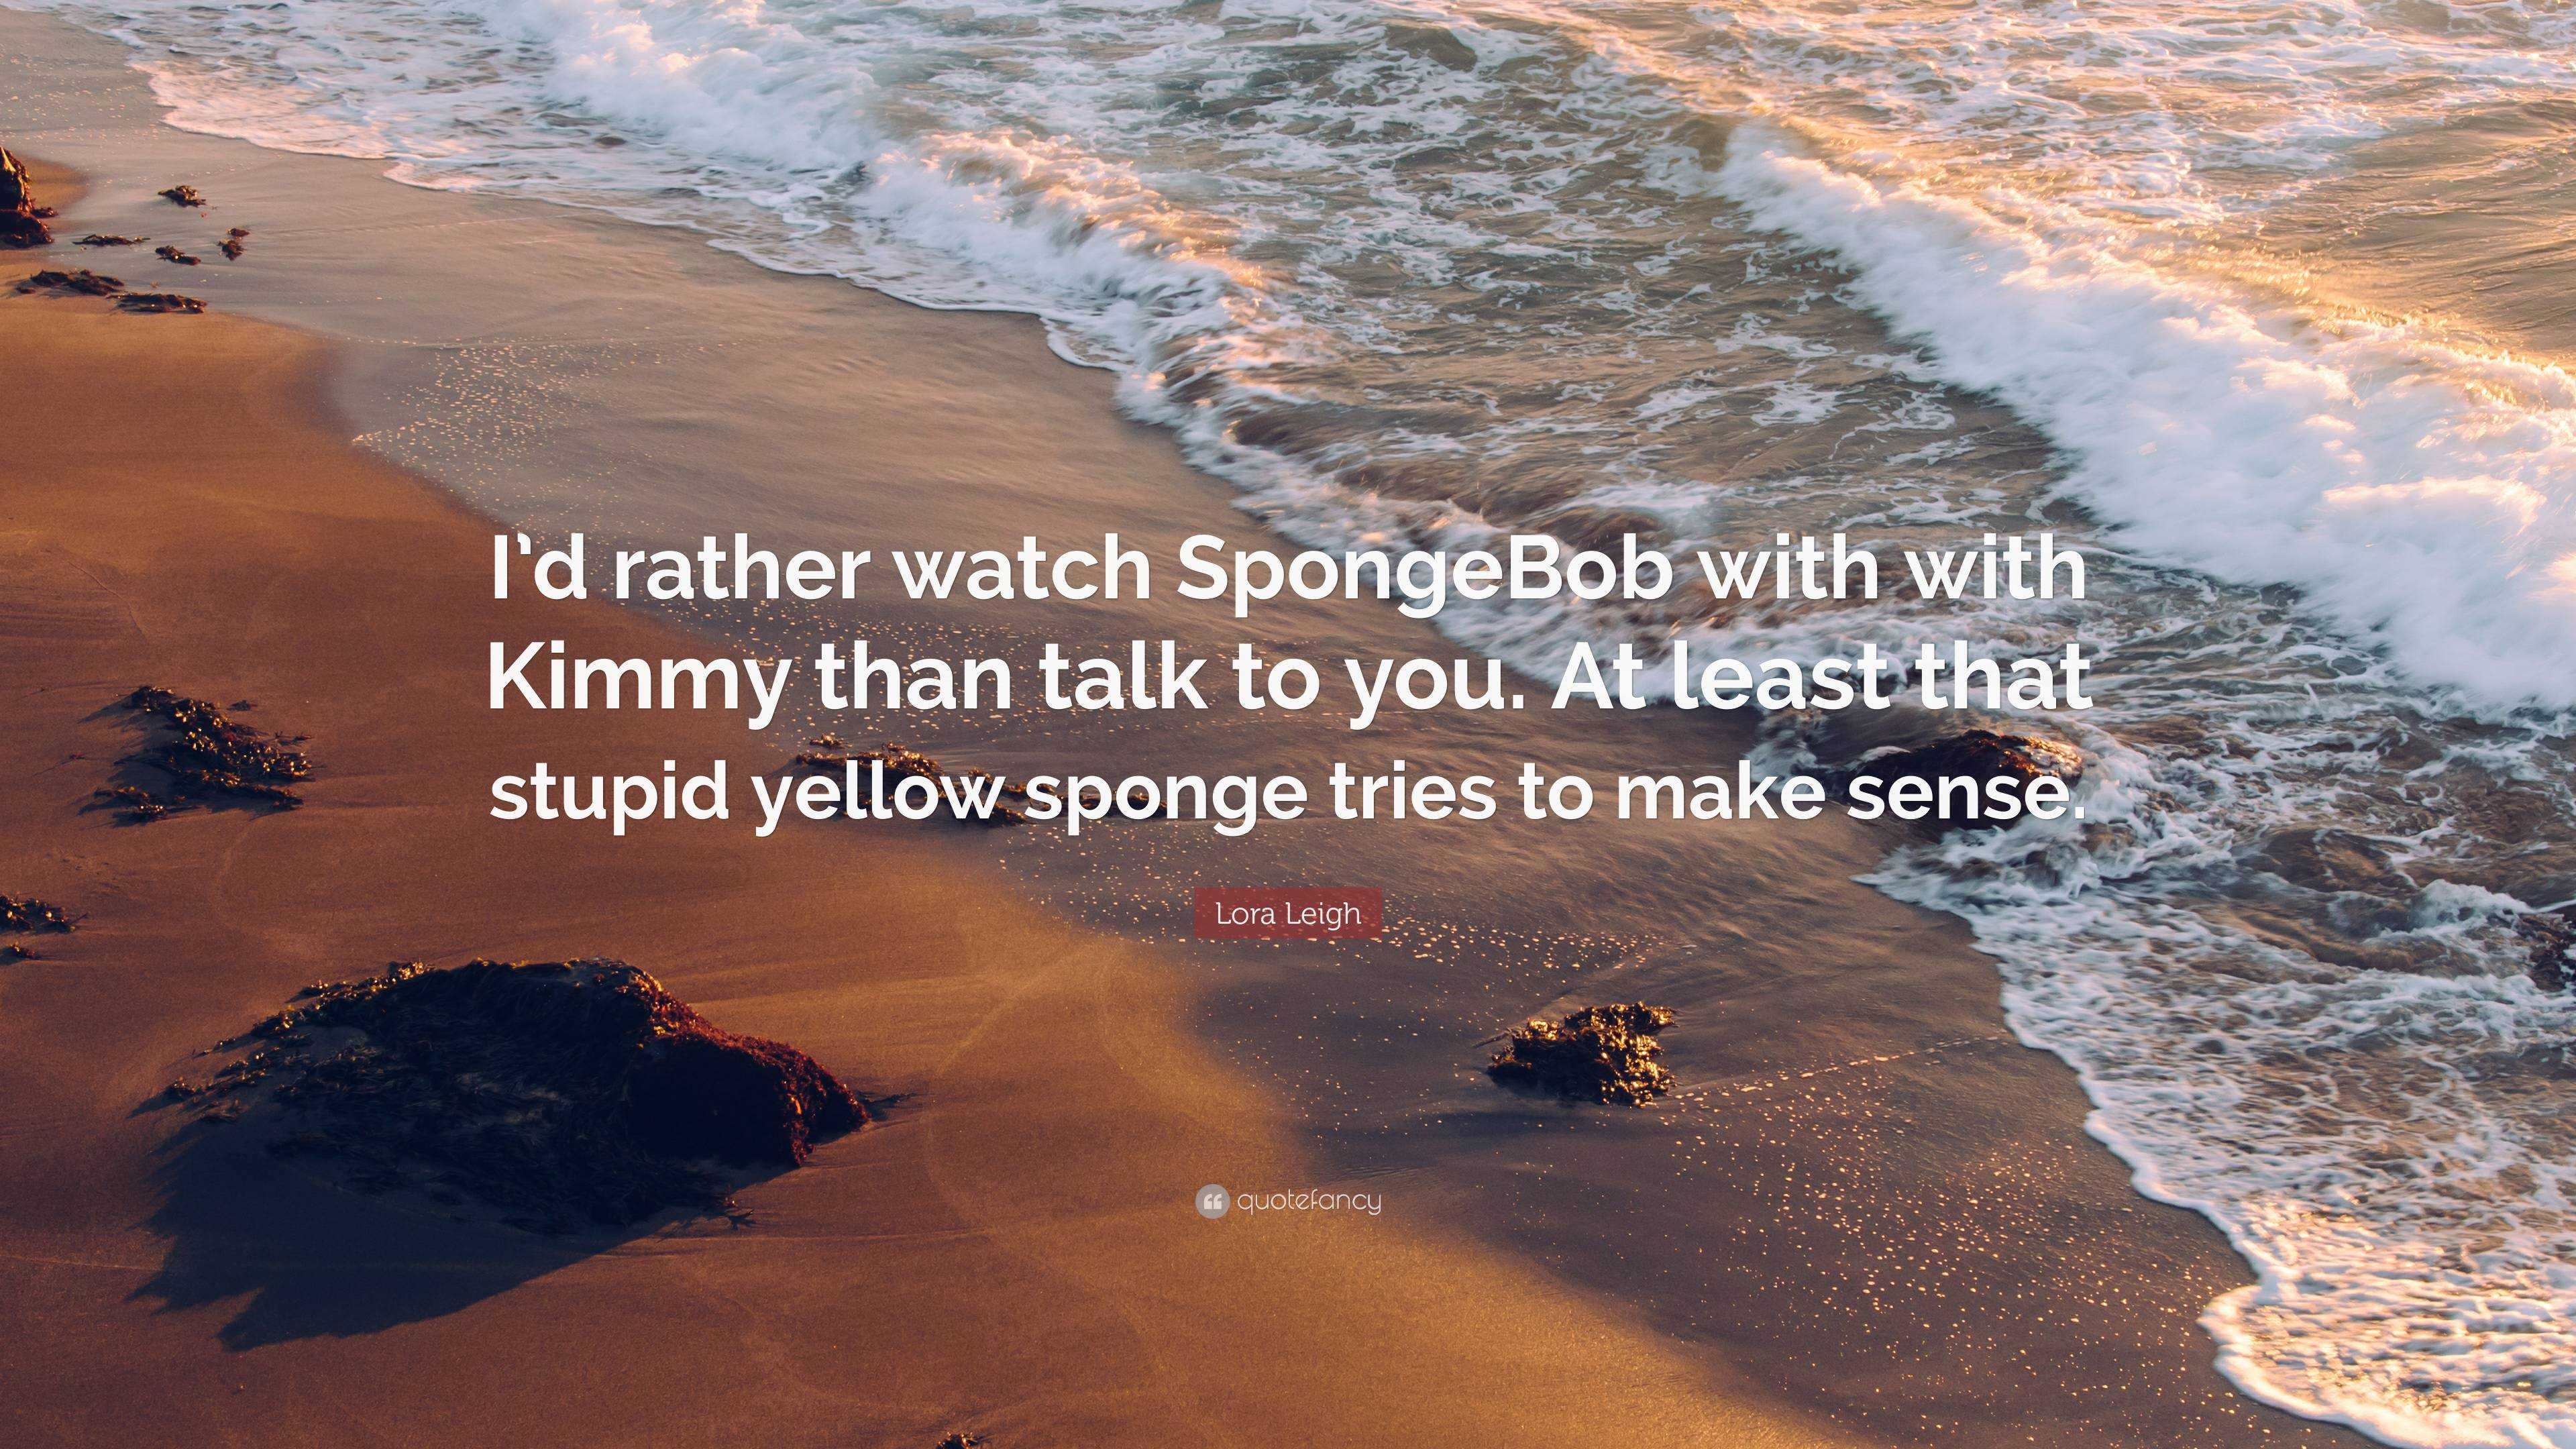 Spongebob Squarepants Men's SBP628 Black Strap Watch : Amazon.in: Fashion